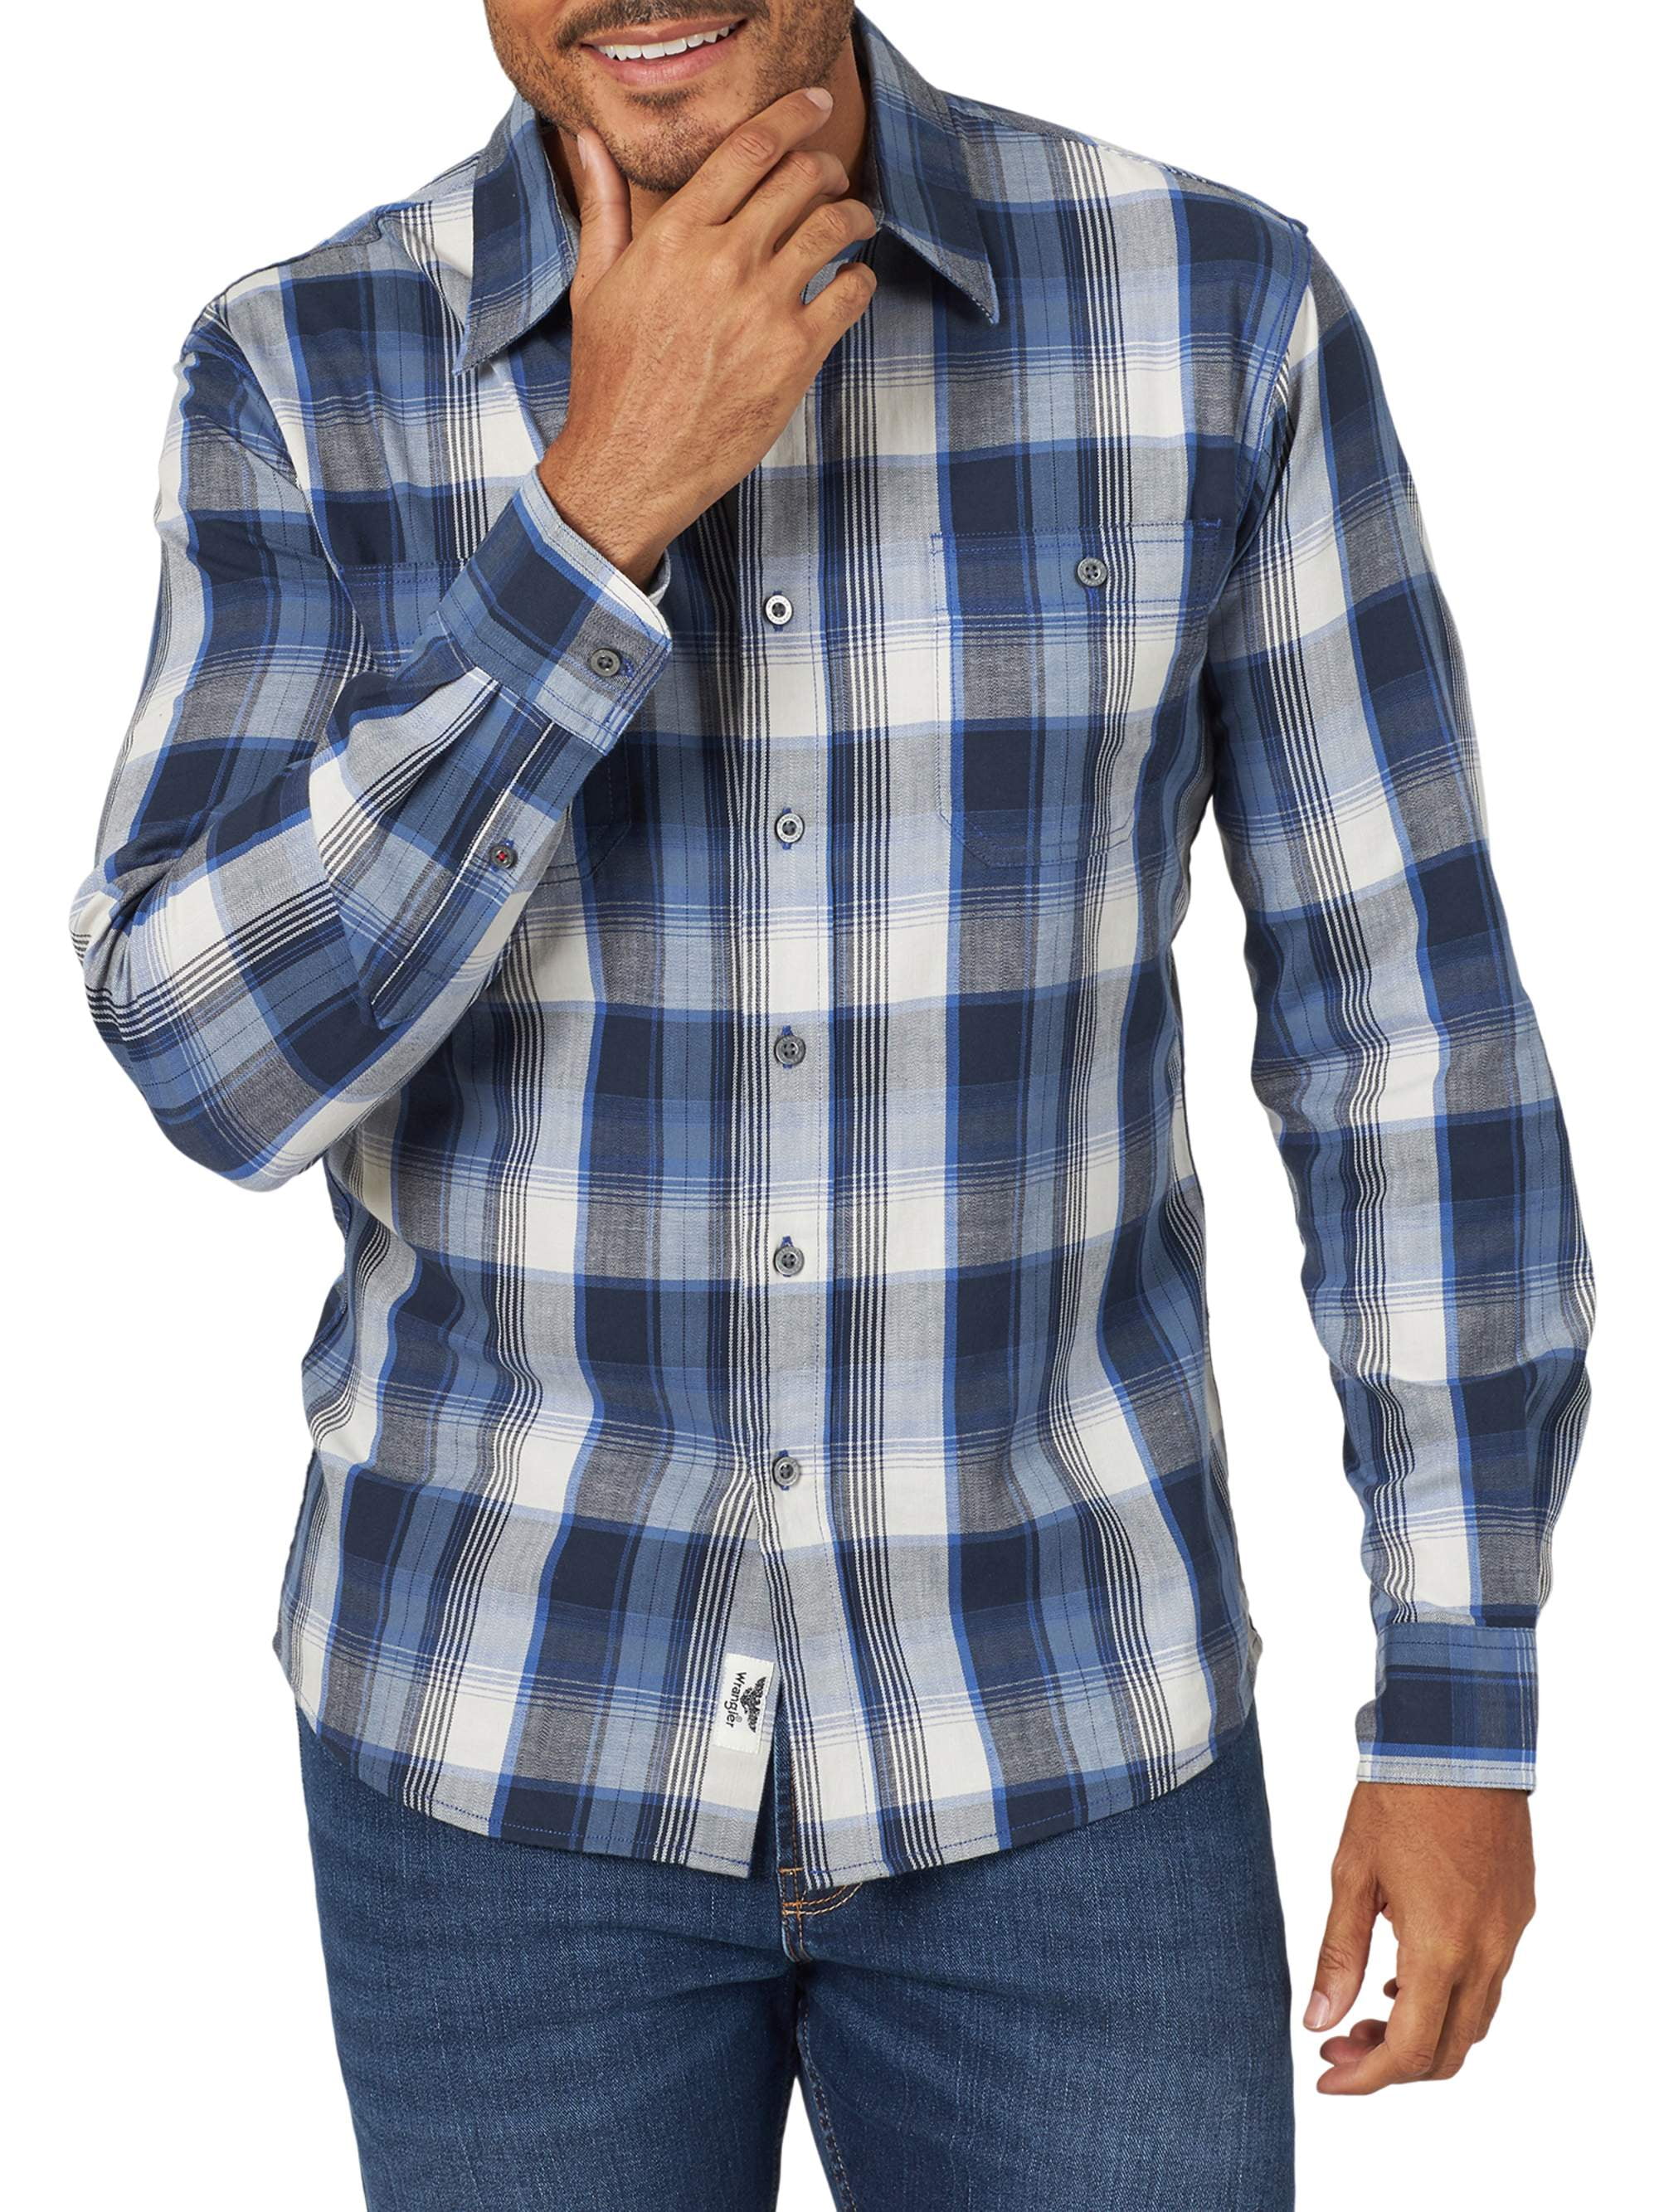 Hopioneer Mens Short Sleeve Button Down Shirt Plaid Near Slim-fit Cotton Button up Casual Shirt